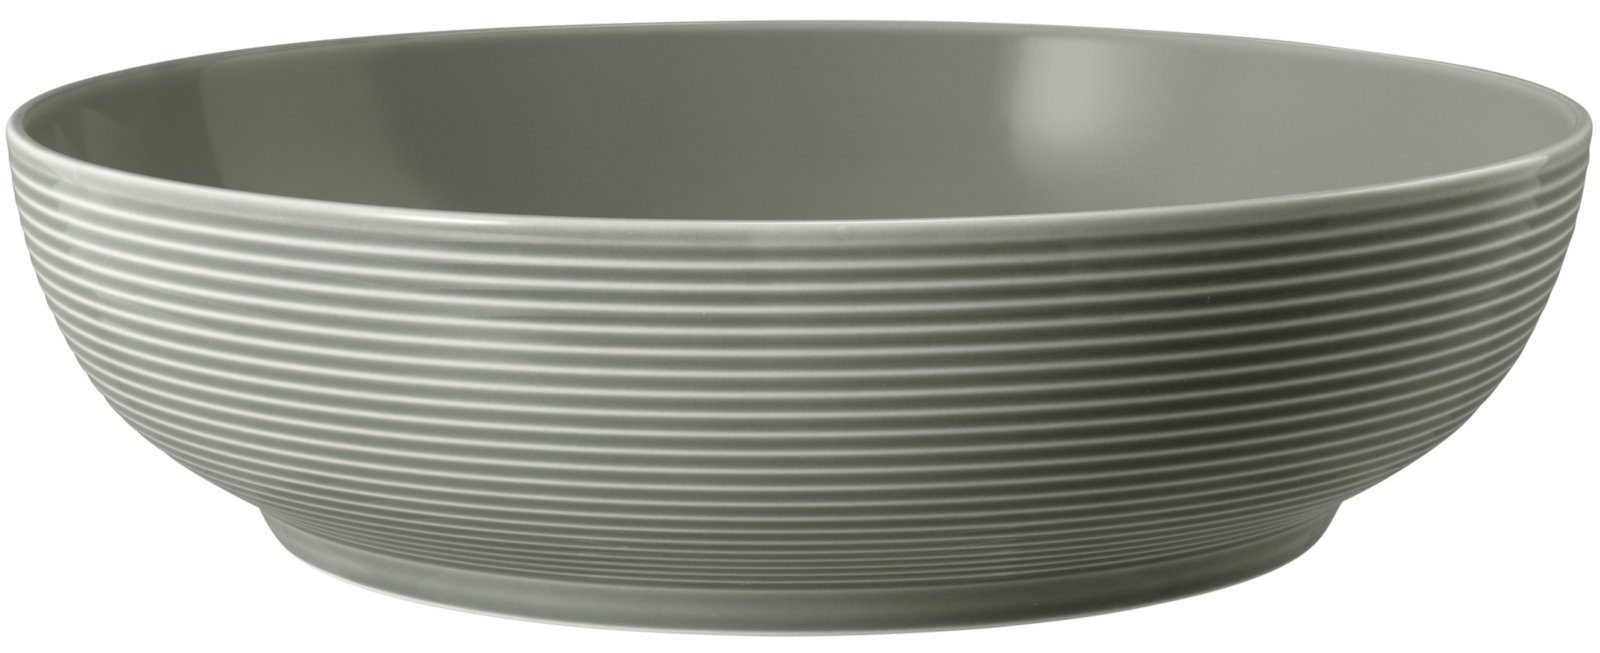 Seltmann Weiden Schale Beat Perlgrau uni Foodbowl 25 cm, Porzellan, (Foodbowl)